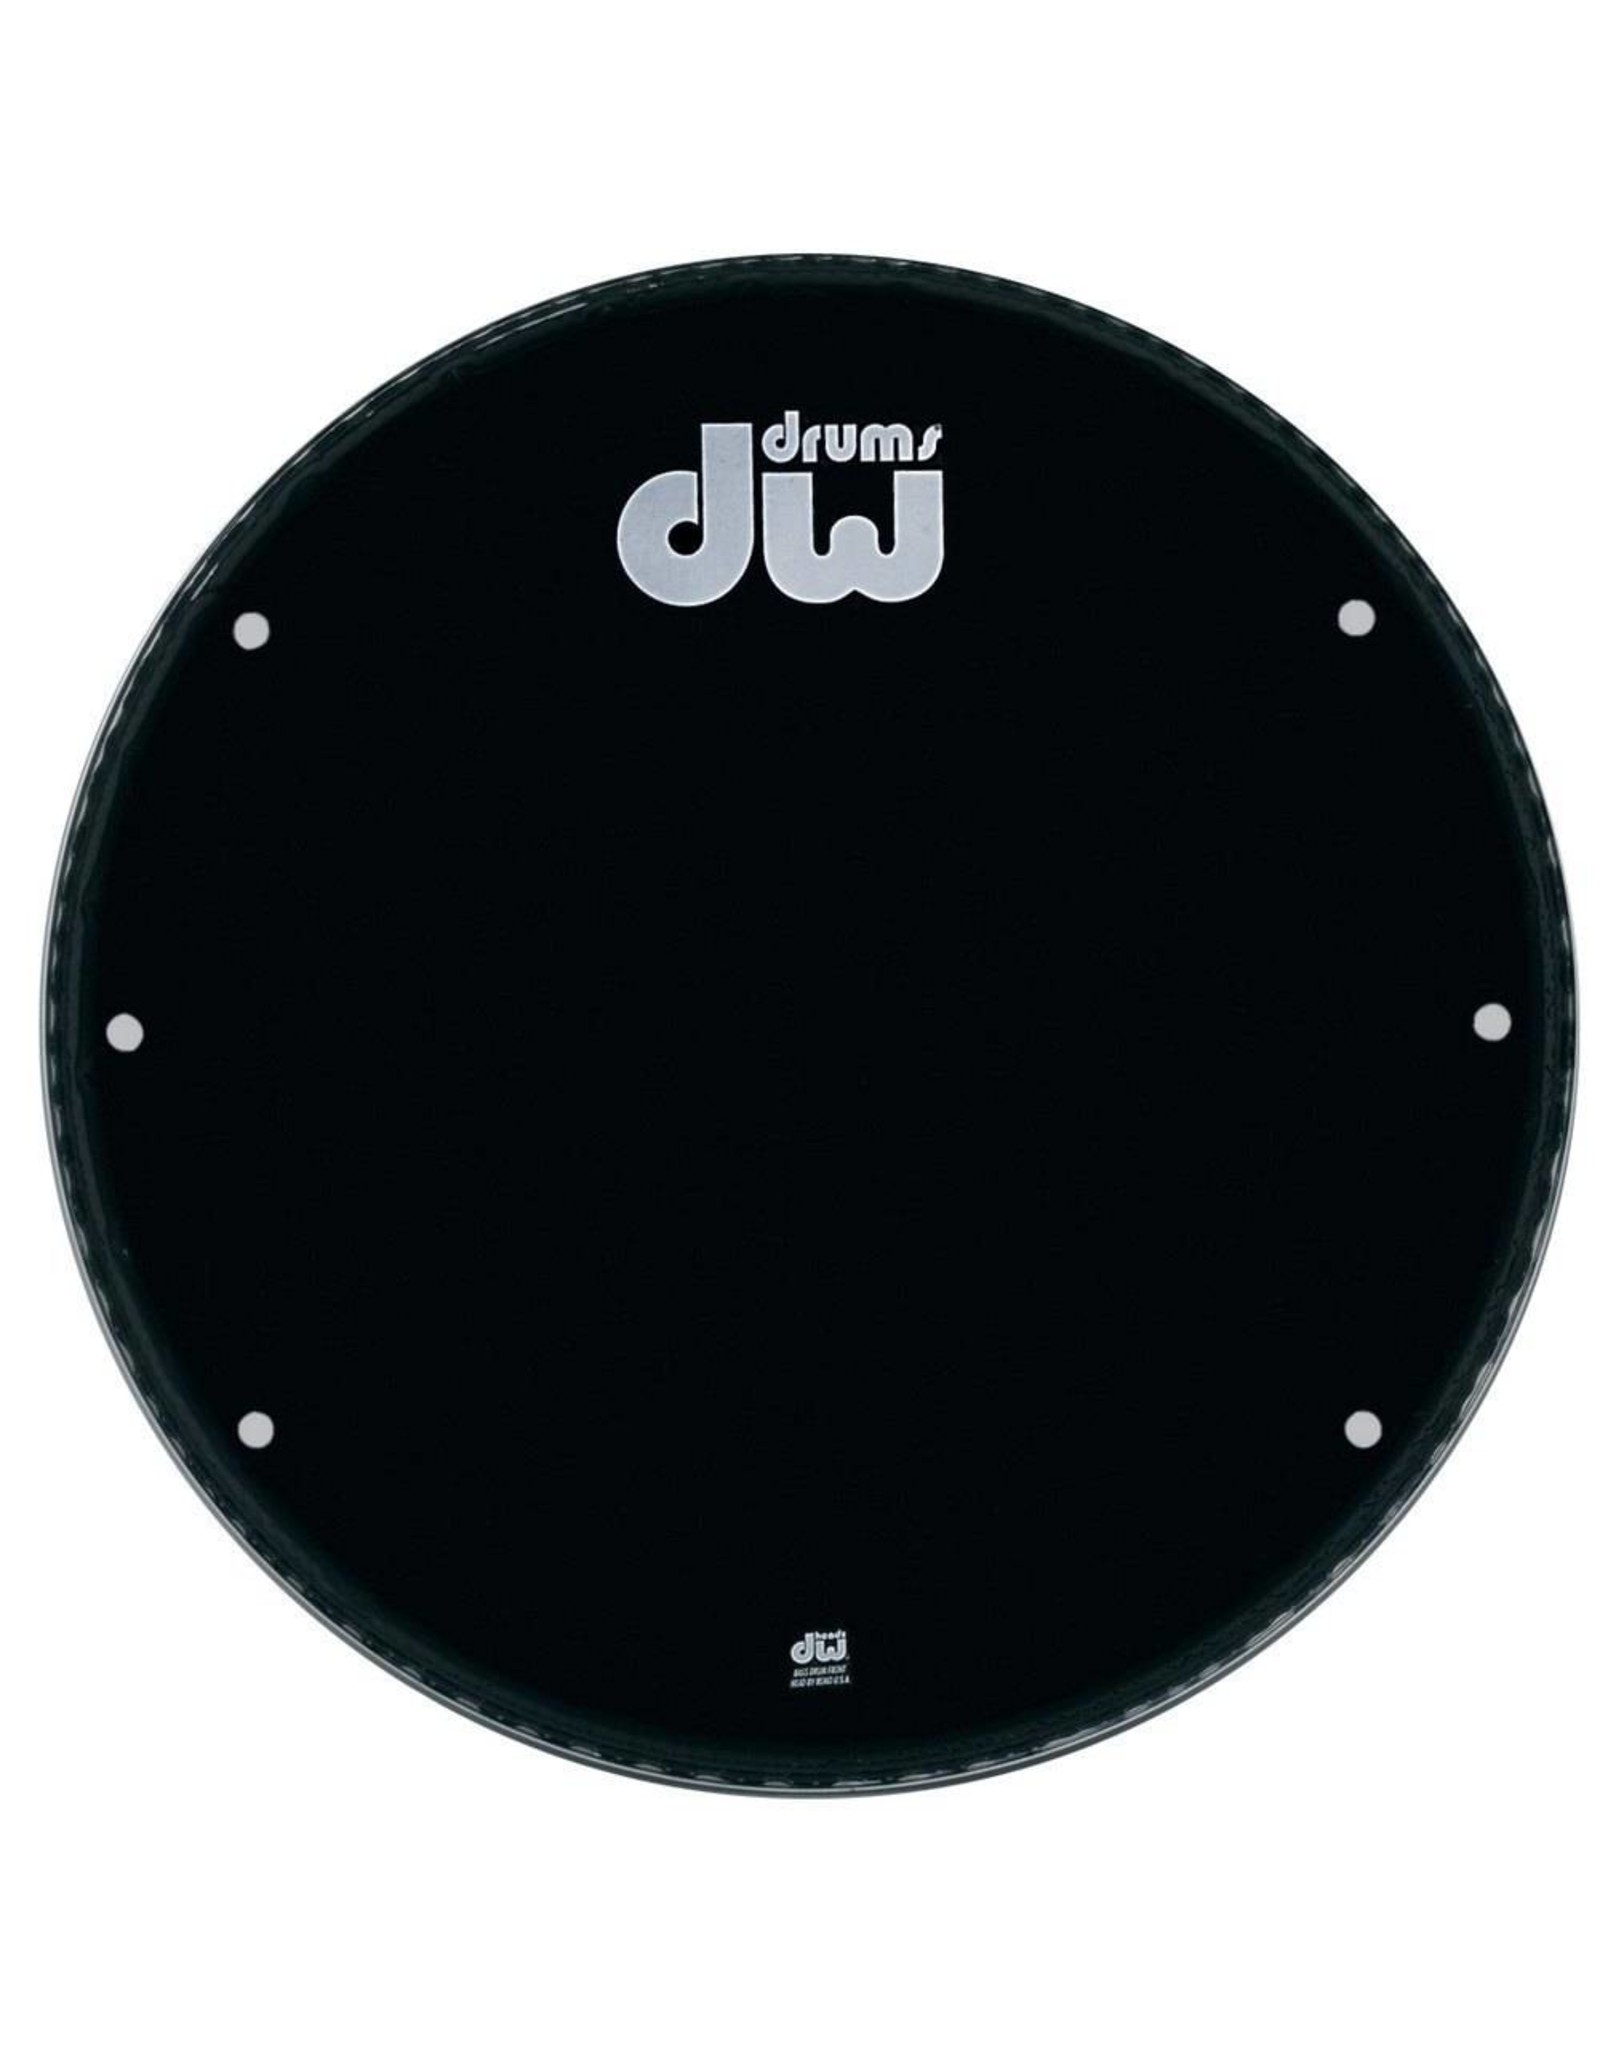 DW drumworkshop DW bassdrum fronthead Ebony black 23" GB-23K with holes